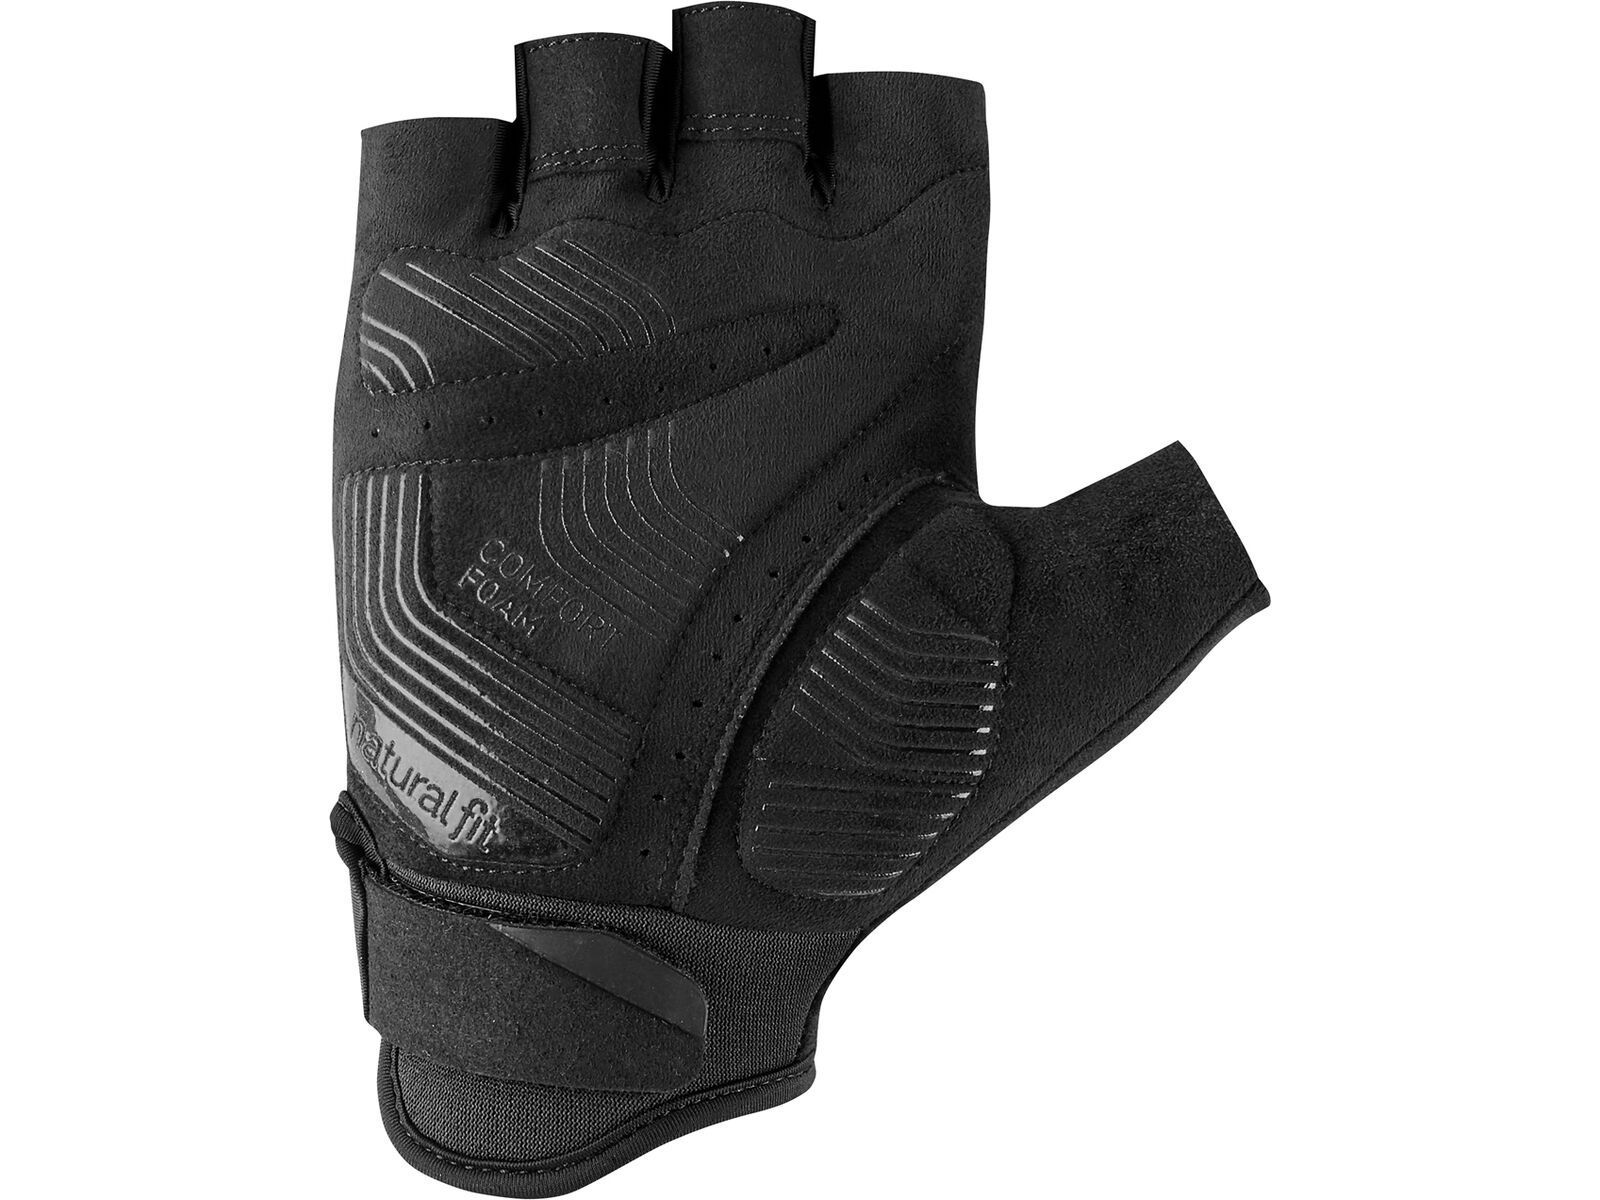 Cube Handschuhe Kurzfinger X Natural Fit, black | Bild 2